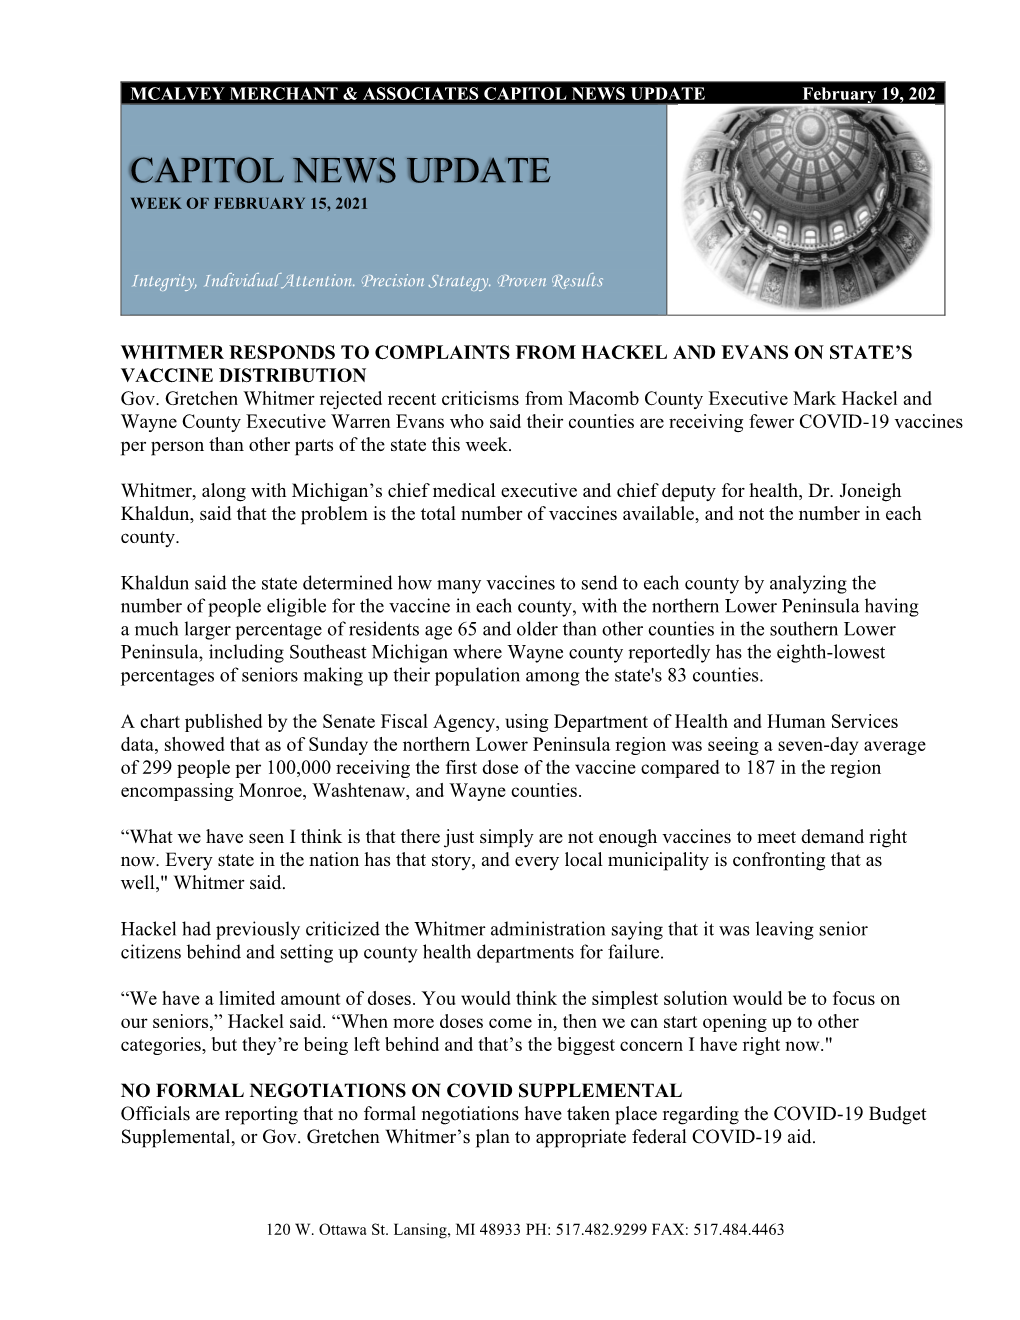 CAPITOL NEWS UPDATE February 19, 202